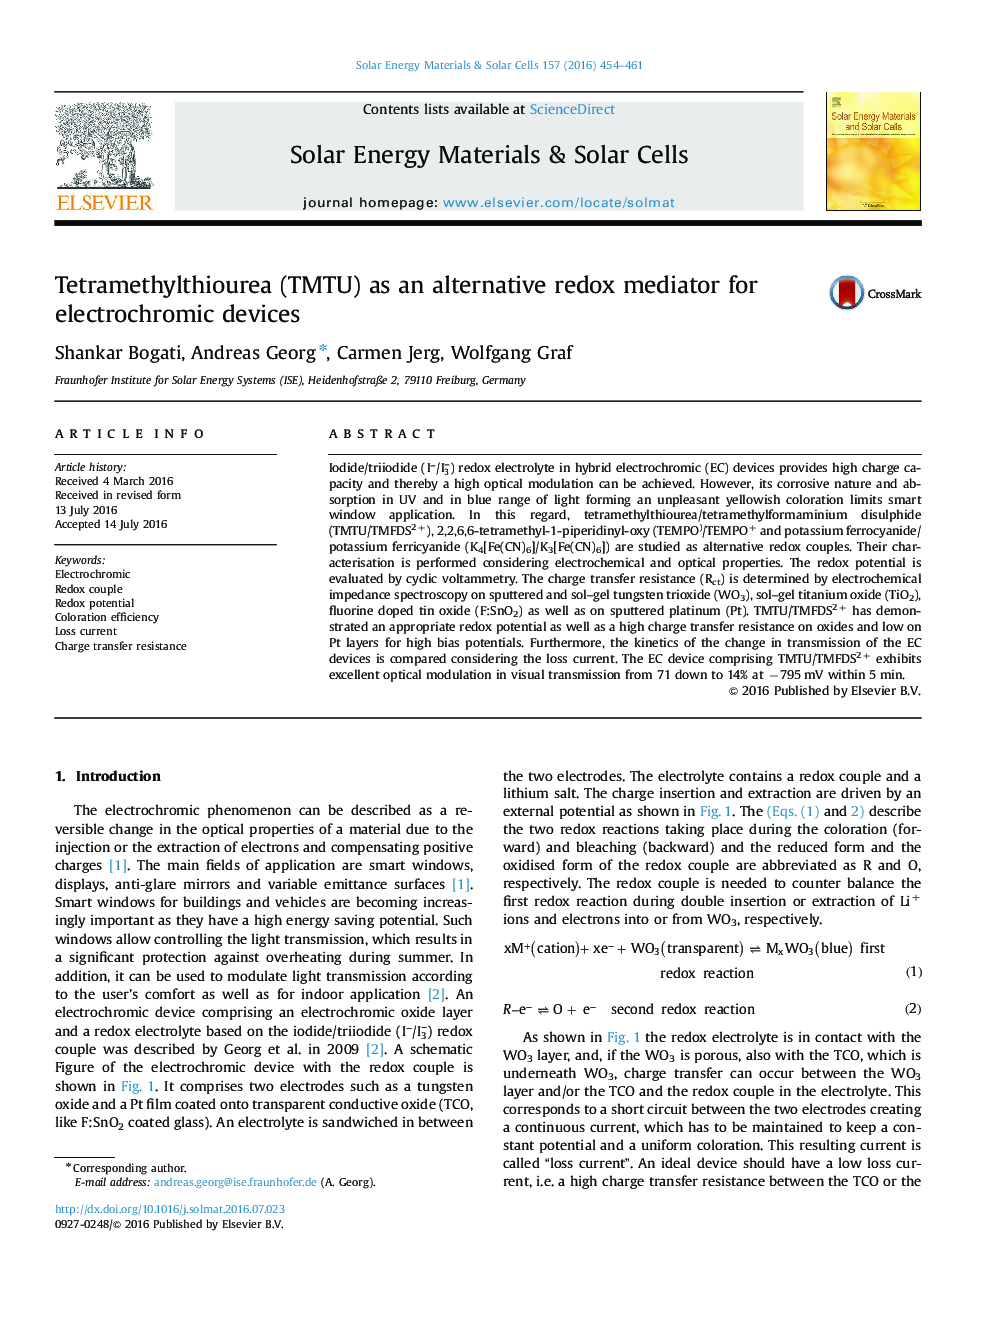 Tetramethylthiourea (TMTU) as an alternative redox mediator for electrochromic devices